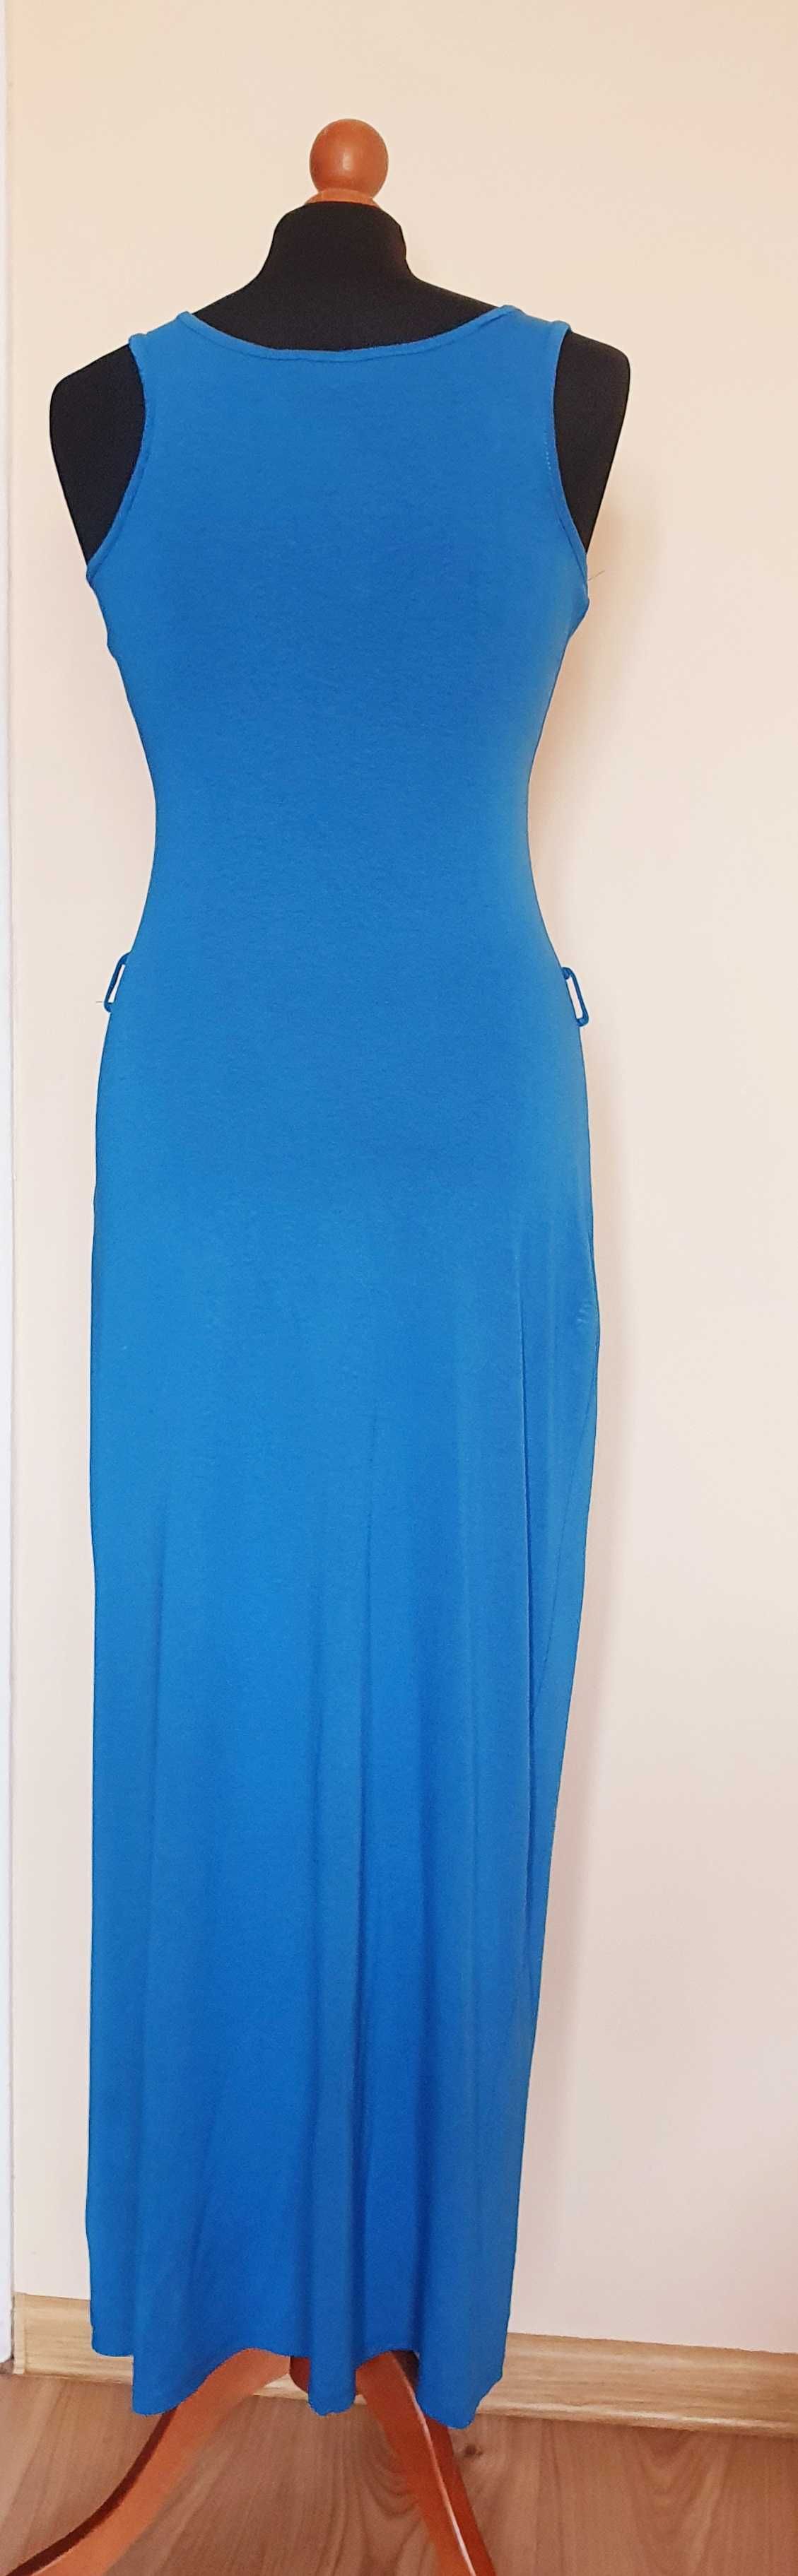 Select świetna niebieska sukienka maxi bokserka s